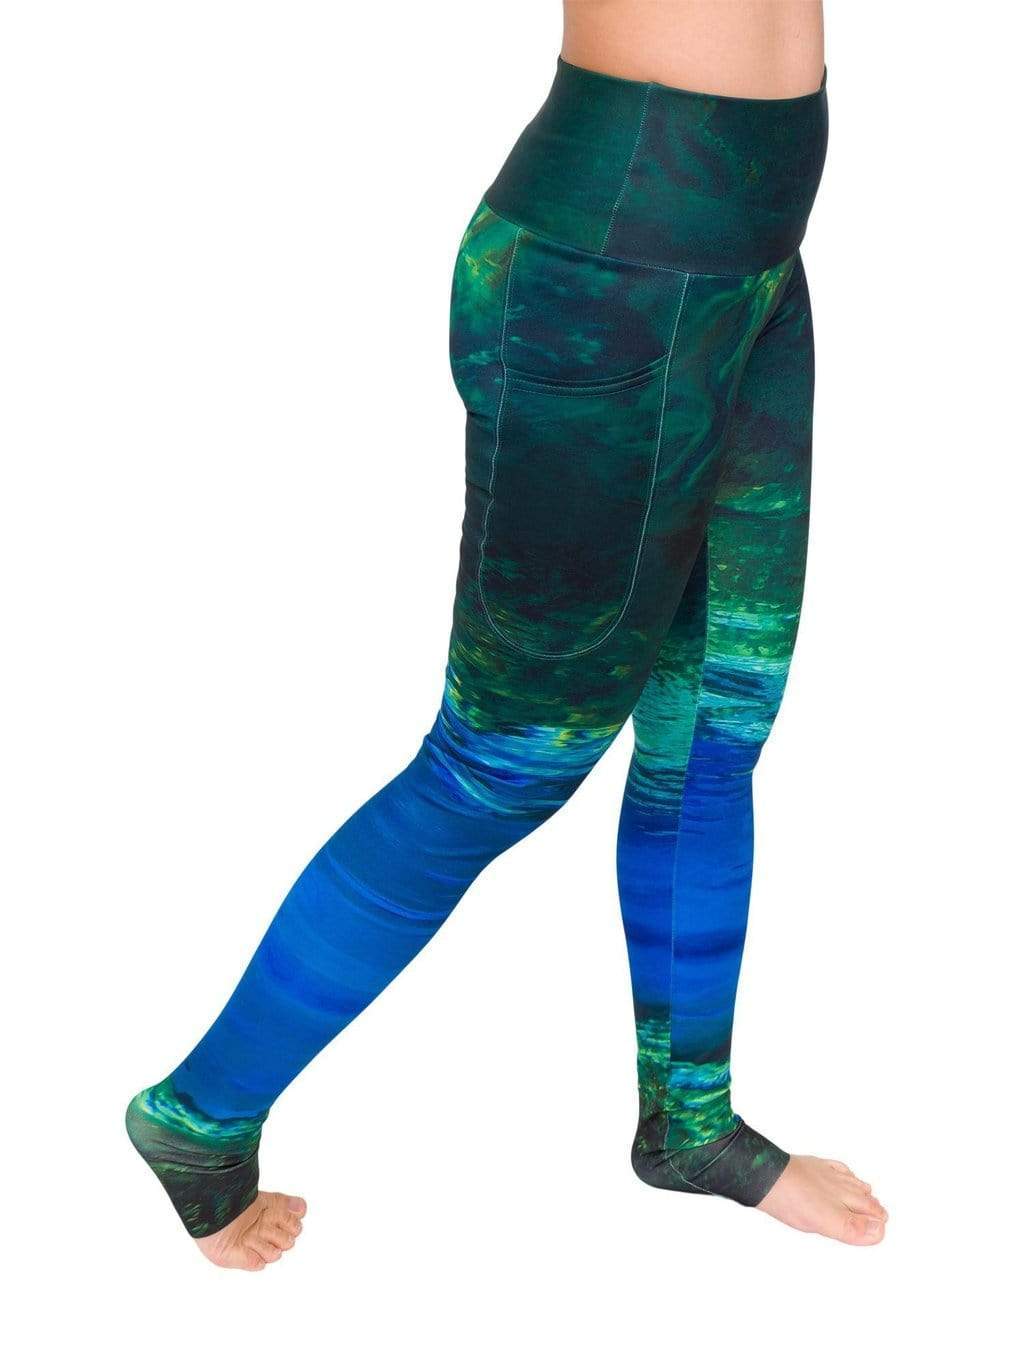 Super Soft Yoga Leggings - Reef Teal Blue Marl, Women's Leggings